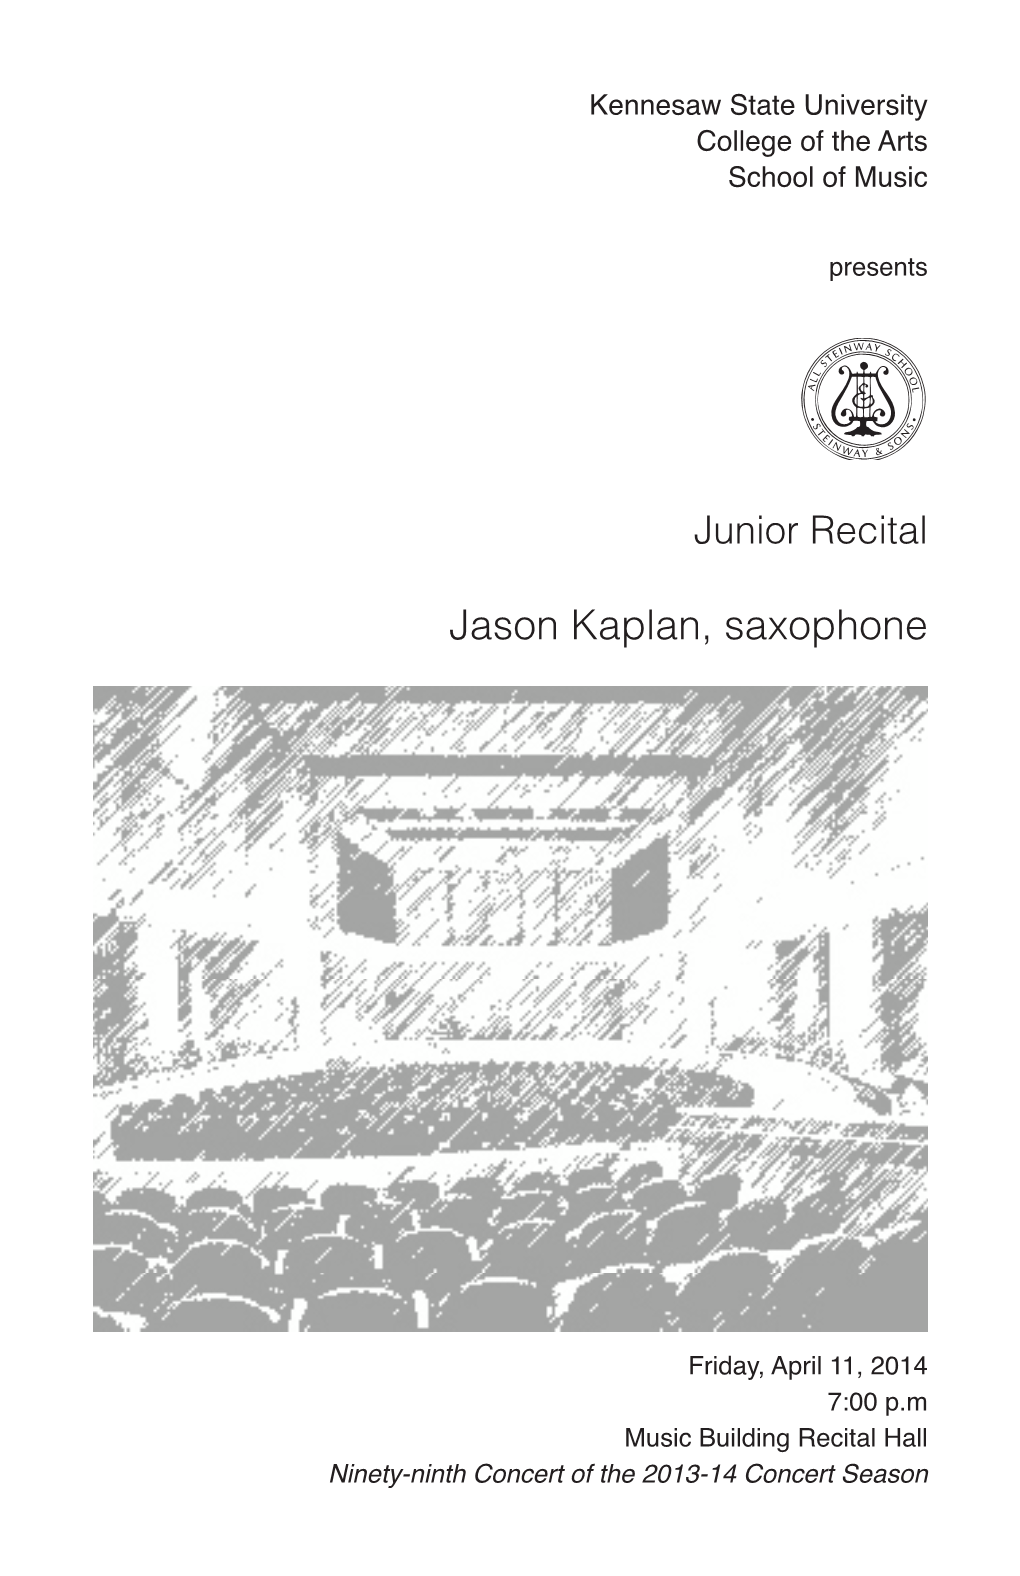 Junior Recital: Jason Kaplan, Saxophone